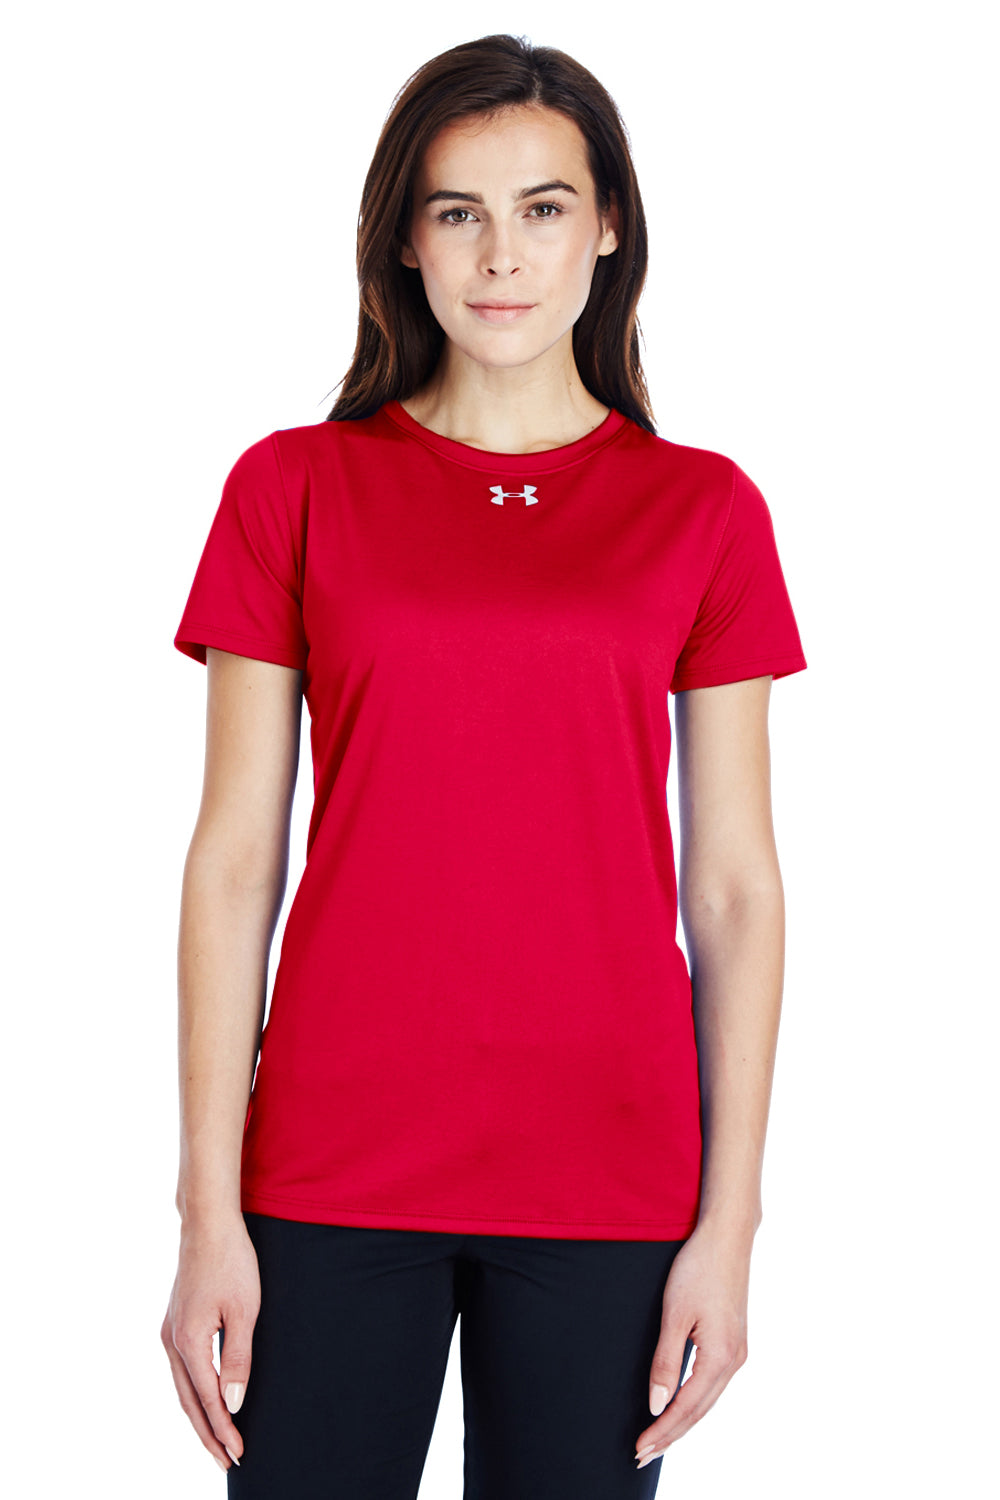 Under Armour 1305510 Womens Locker 2.0 Moisture Wicking Short Sleeve Crewneck T-Shirt Red Front